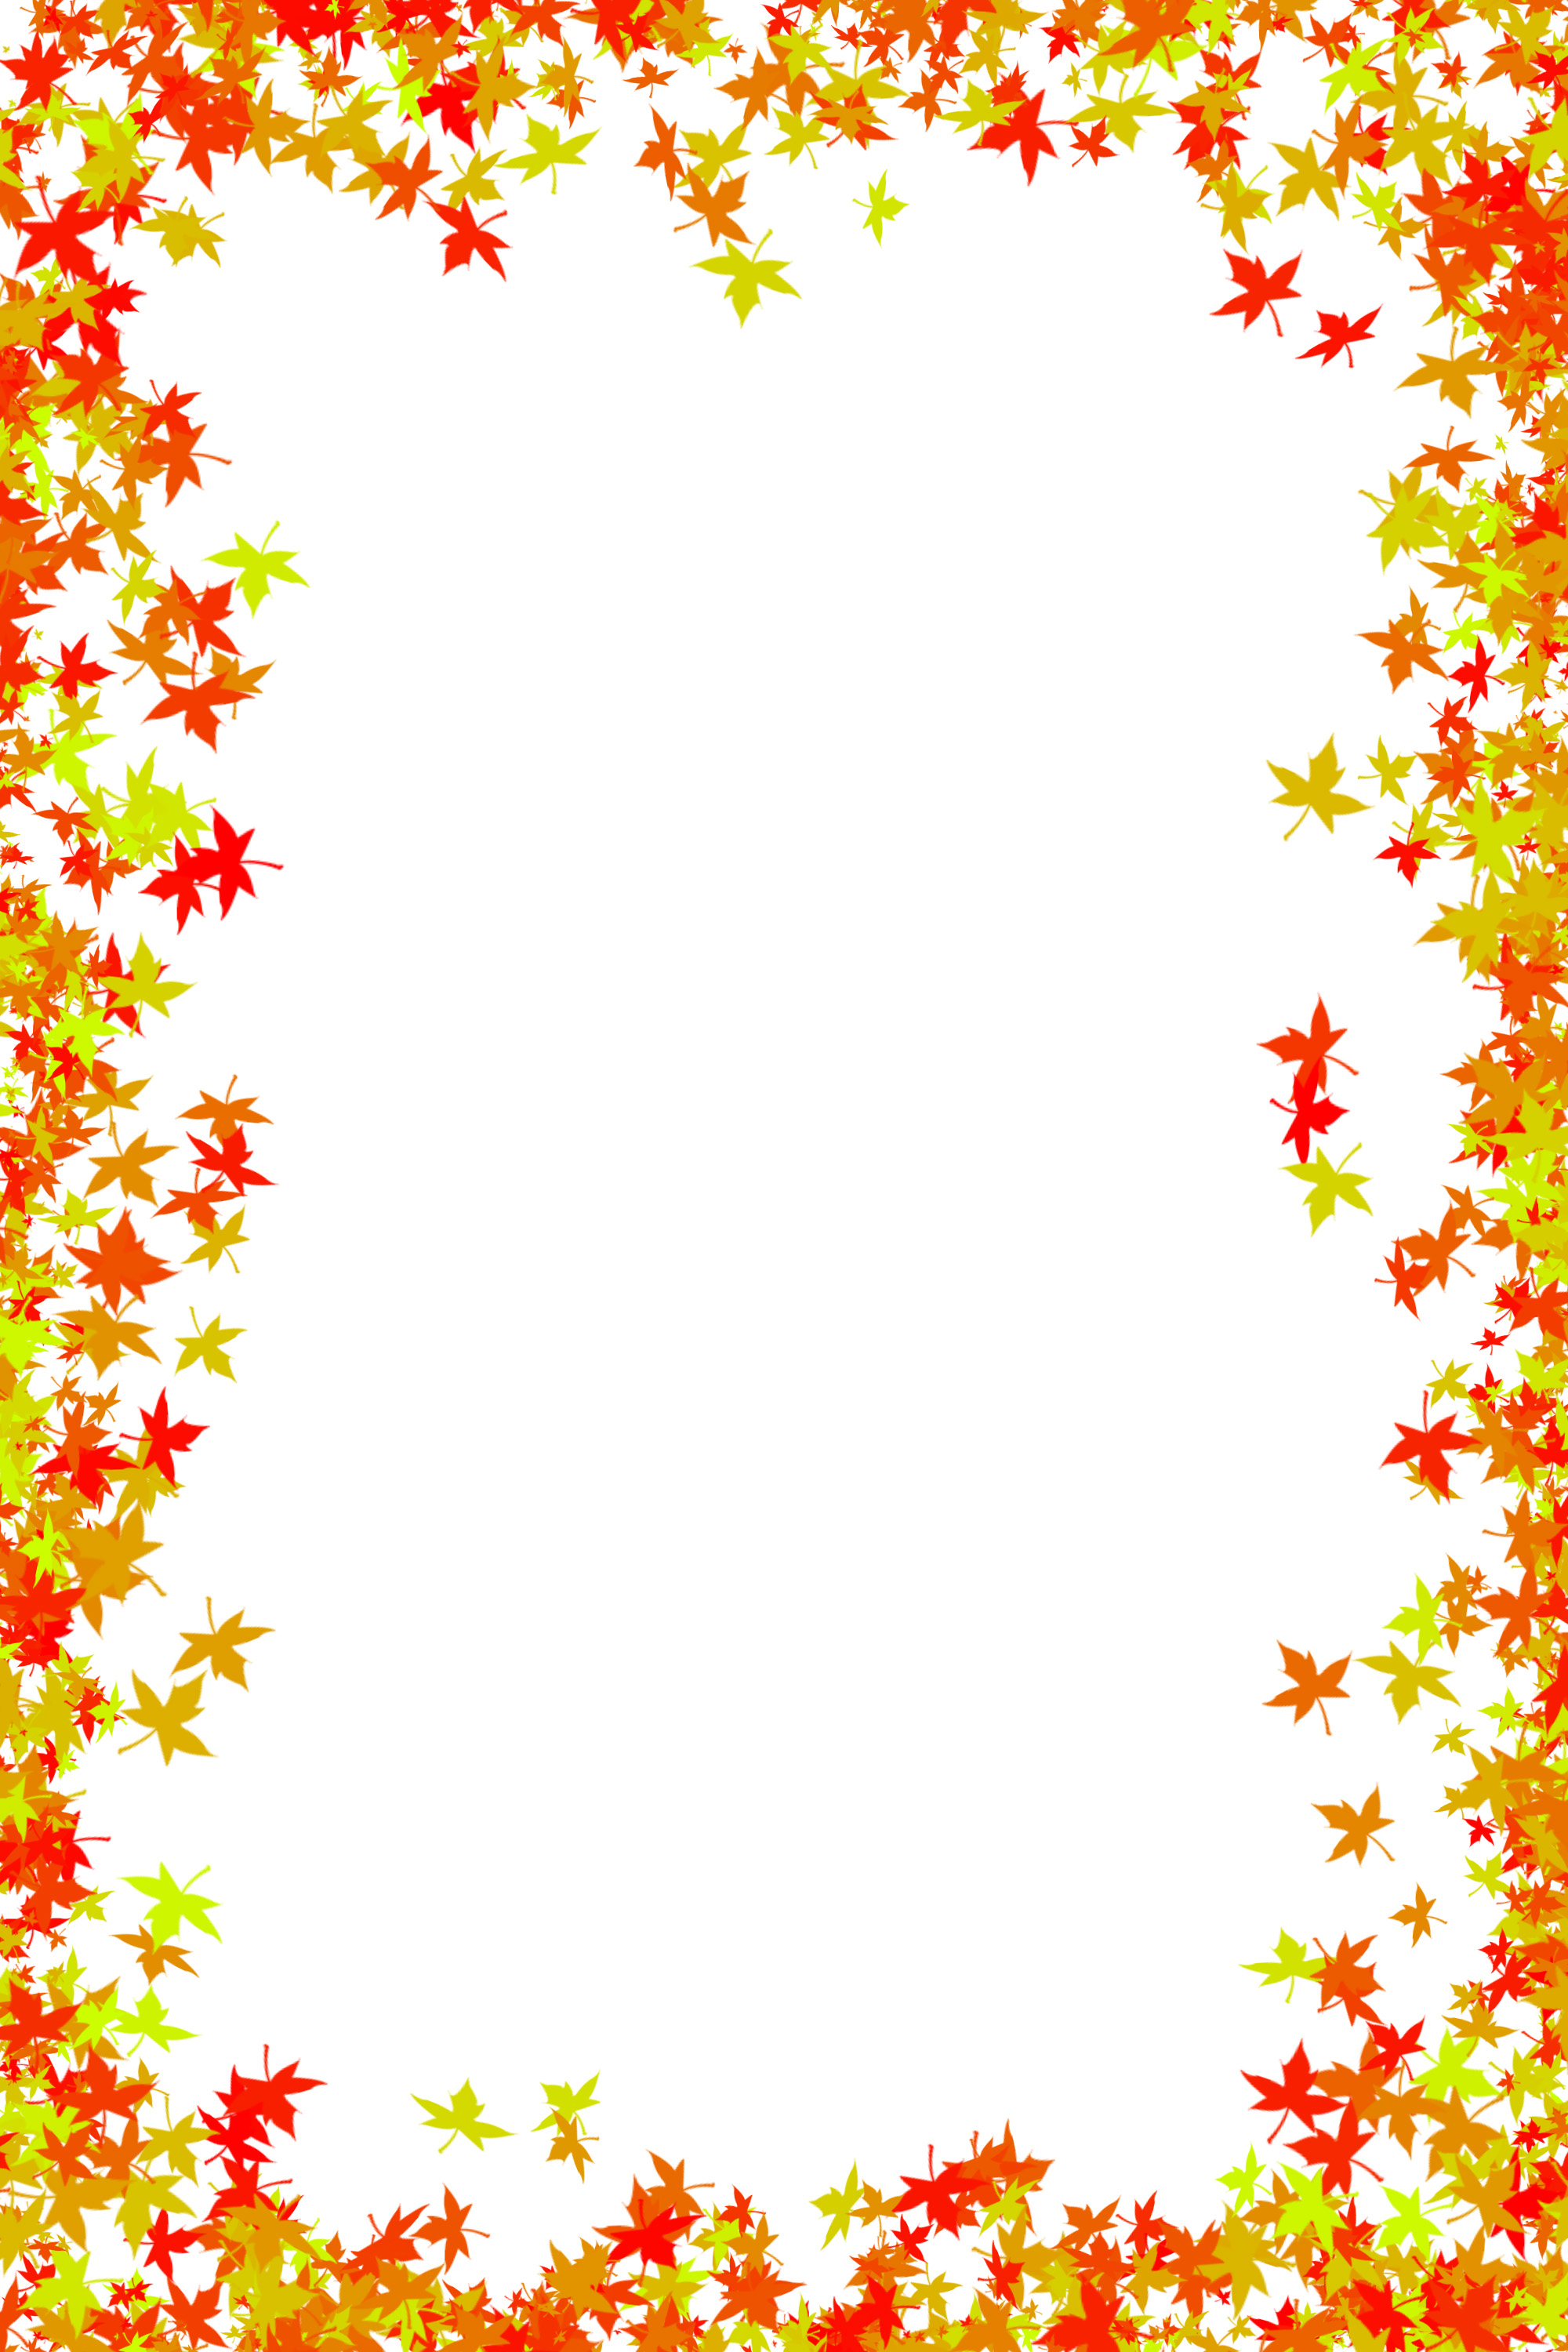 Fall border fall leaves clip art image